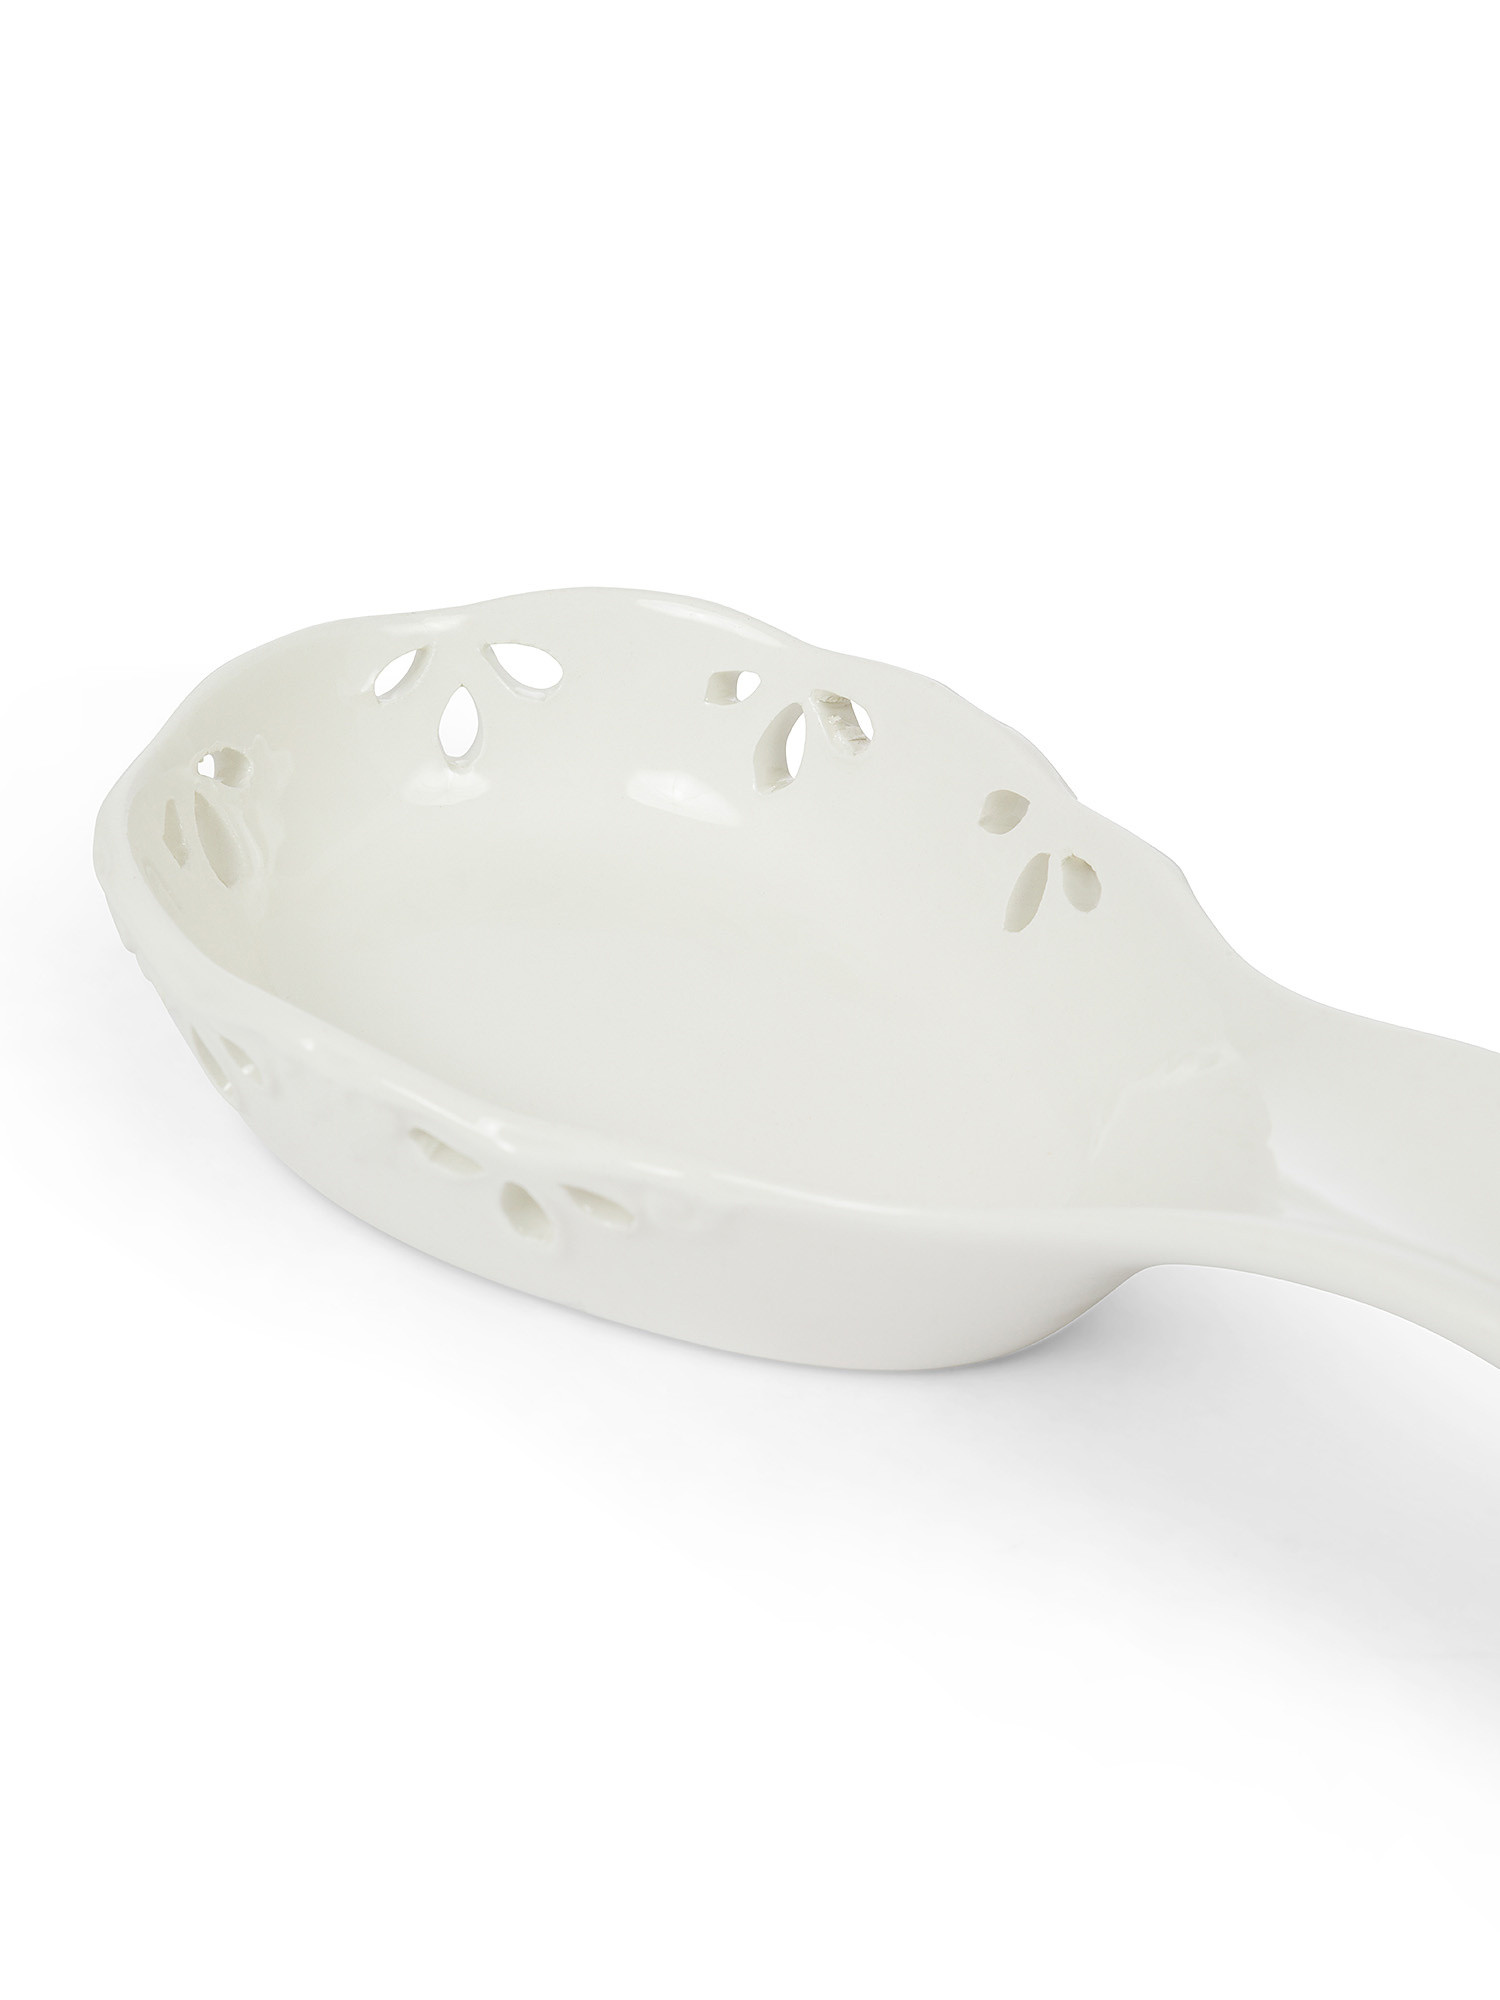 Perforated ceramic ladle holder, White, large image number 1